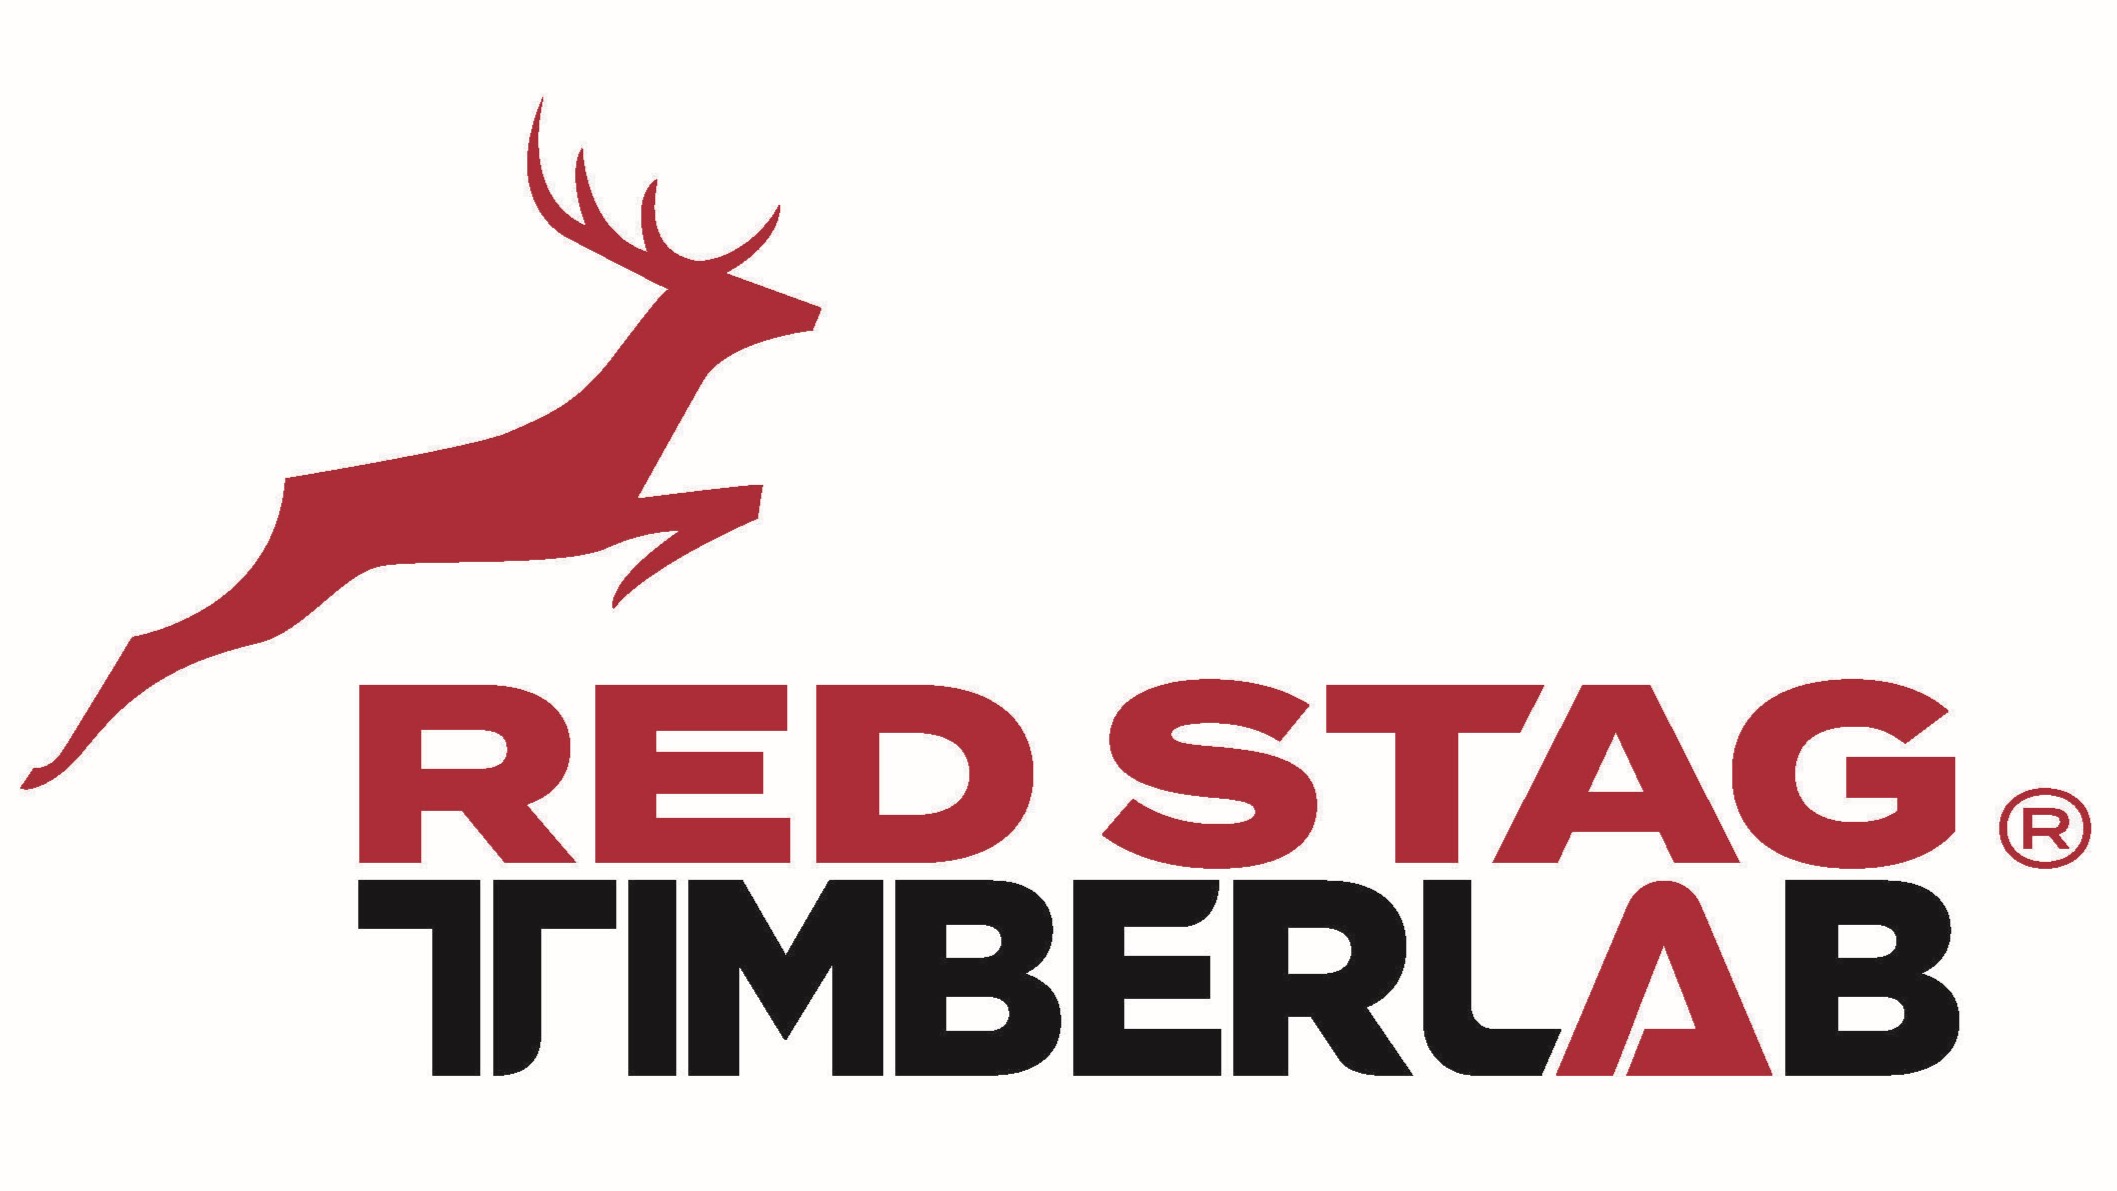 Red Stag TimberLab Ltd